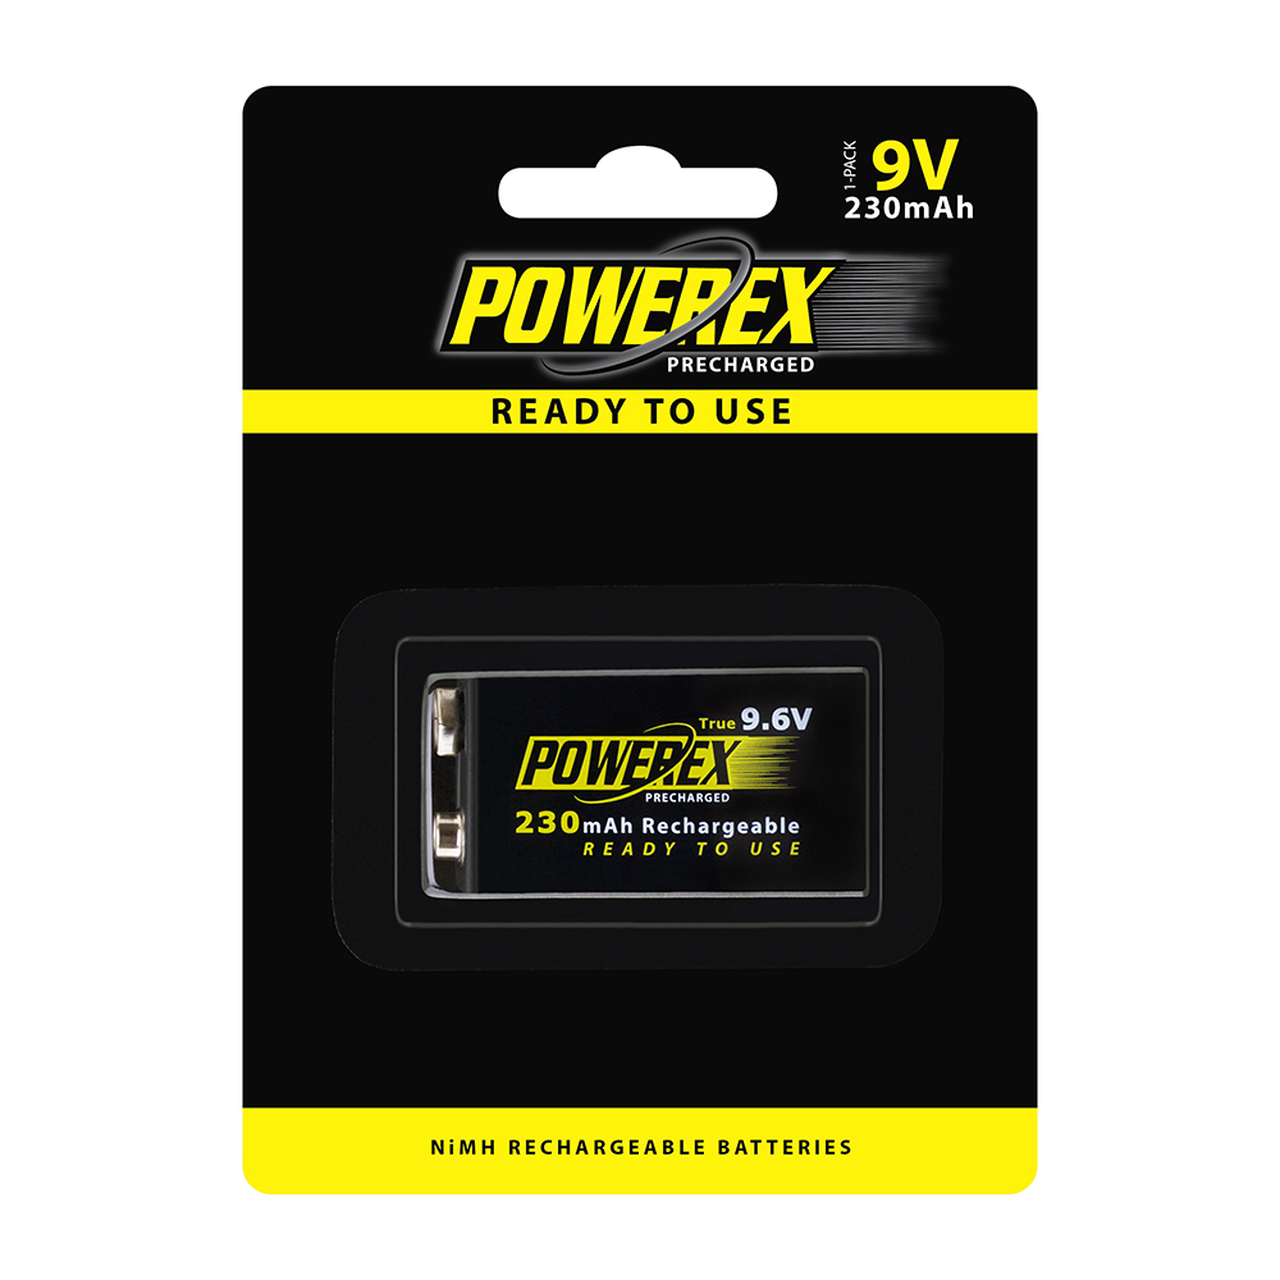 Powerex Precharged 9,6V 230 mAh